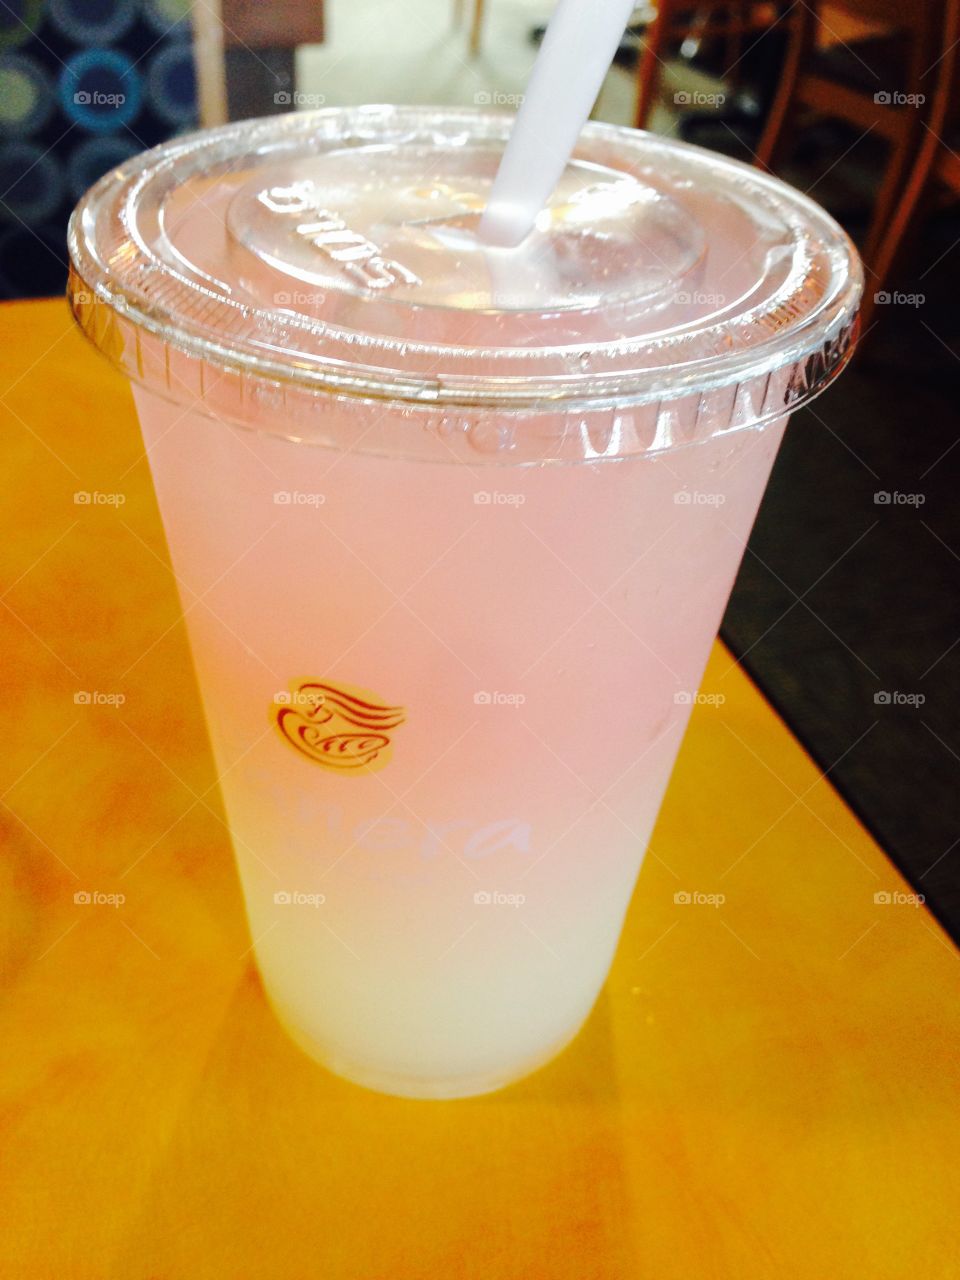 Lemonade!. At Panera with some cool lemonade. 